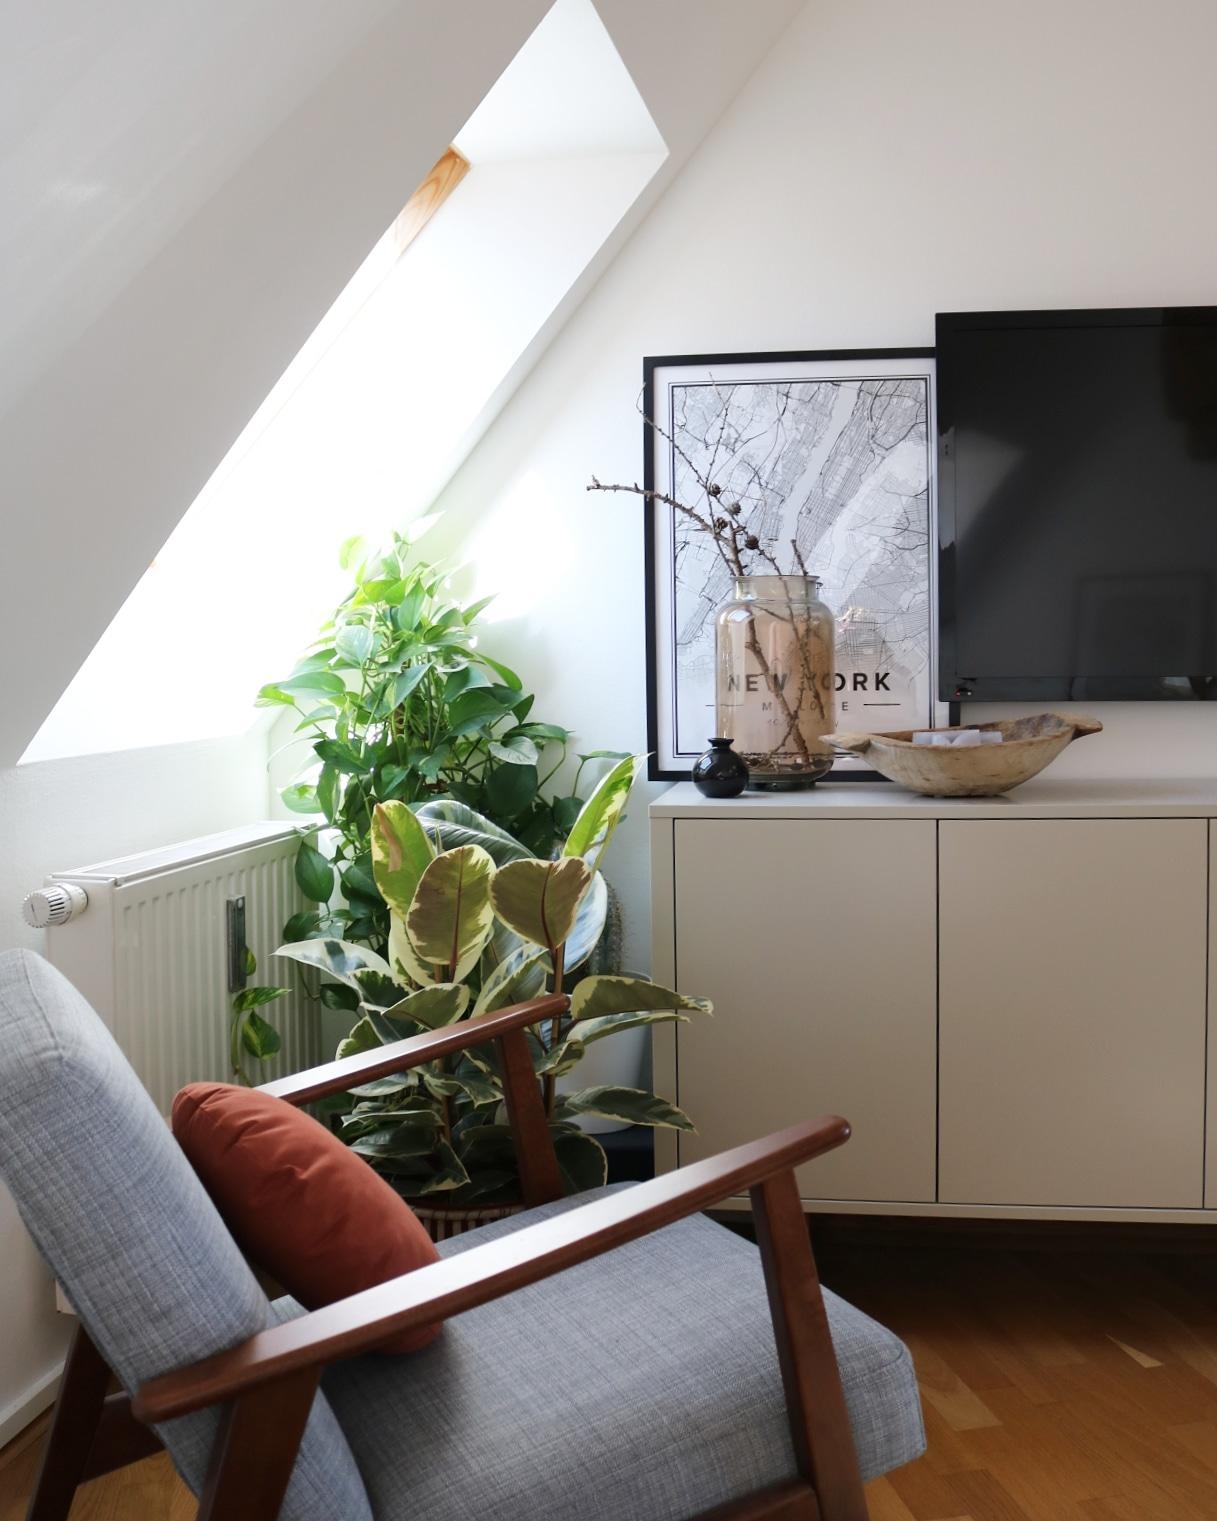 Wohnzimmer 😊
#livingroom #hygge #cozycorner #myhome